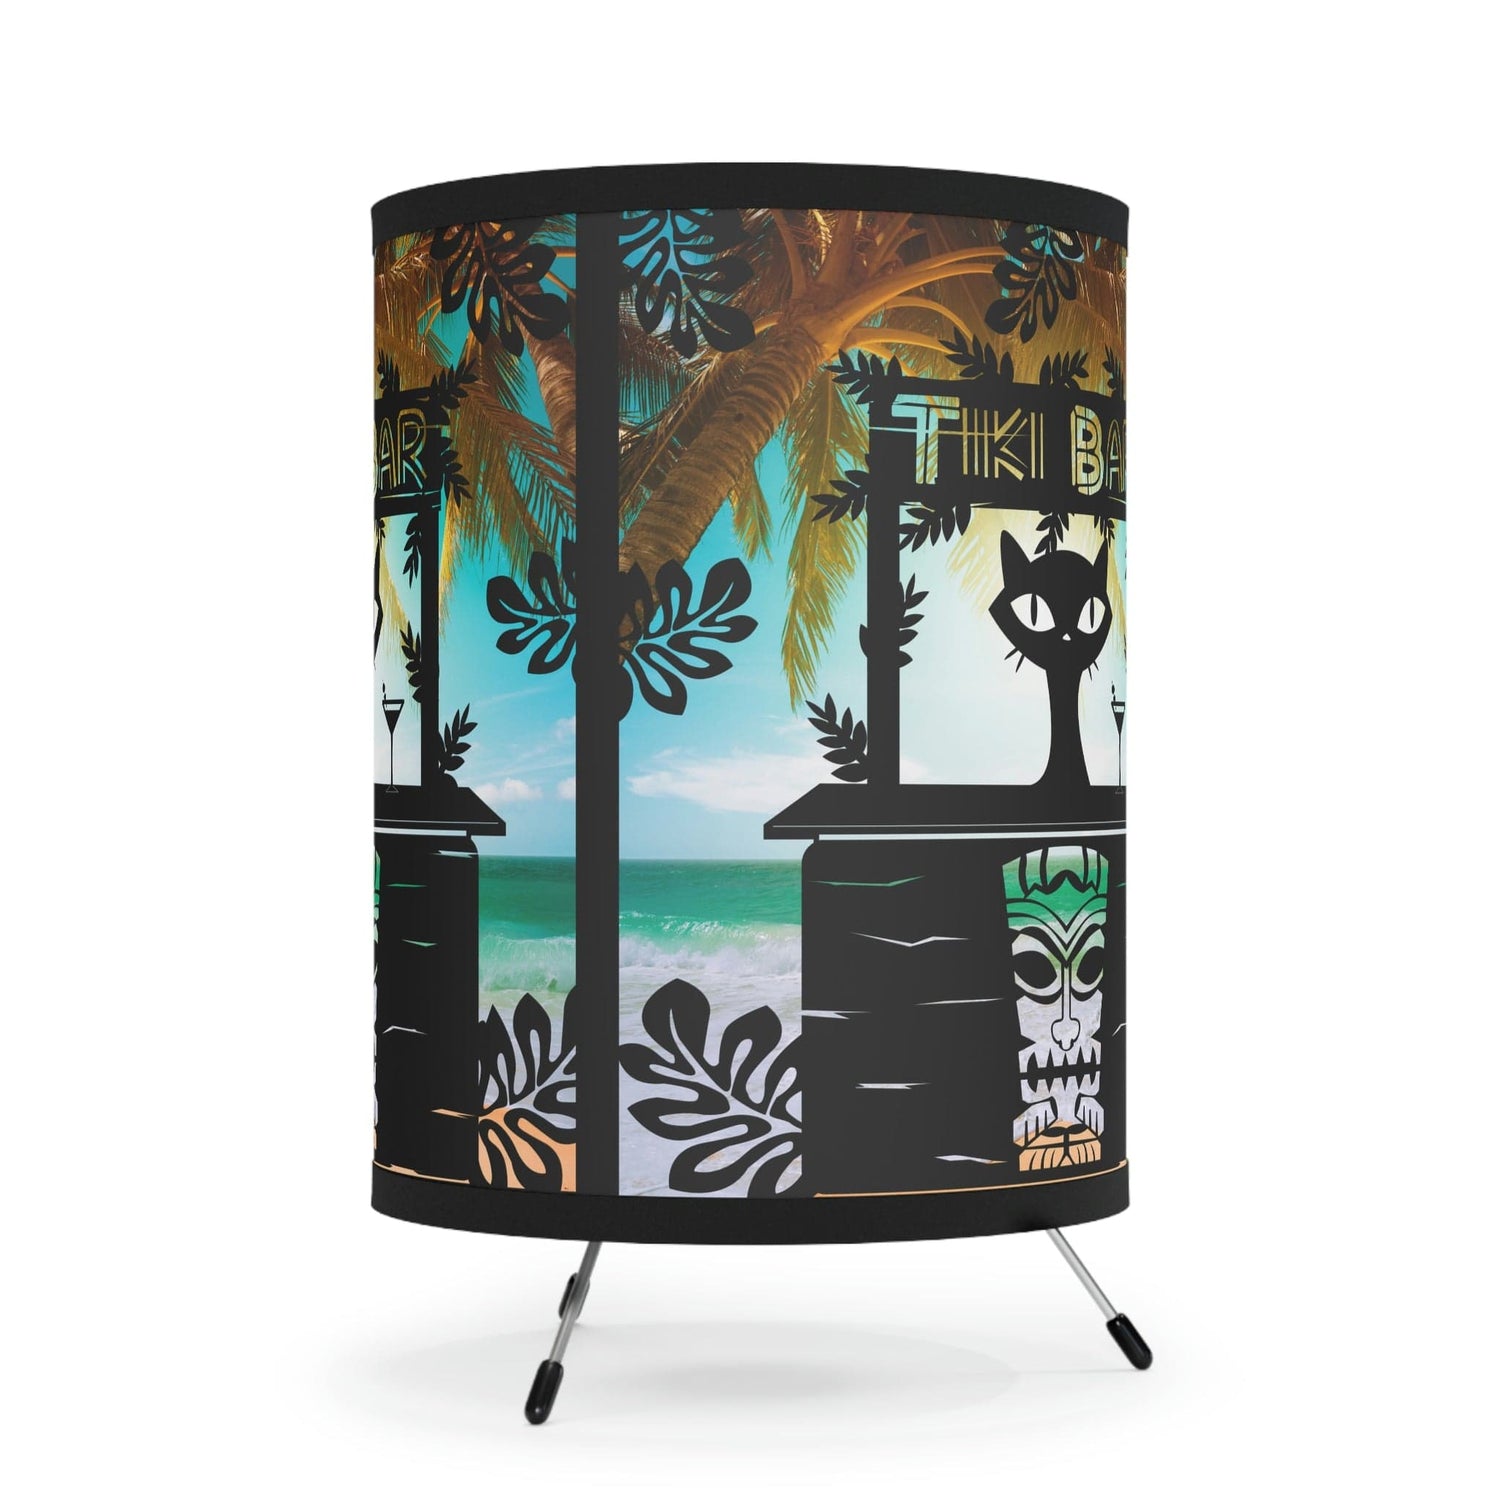 Tiki Bar Decor, Atomic Mod Cat, Mid Century Modern, Kitsch, Tropical Beach Decor, Tripod Lamp